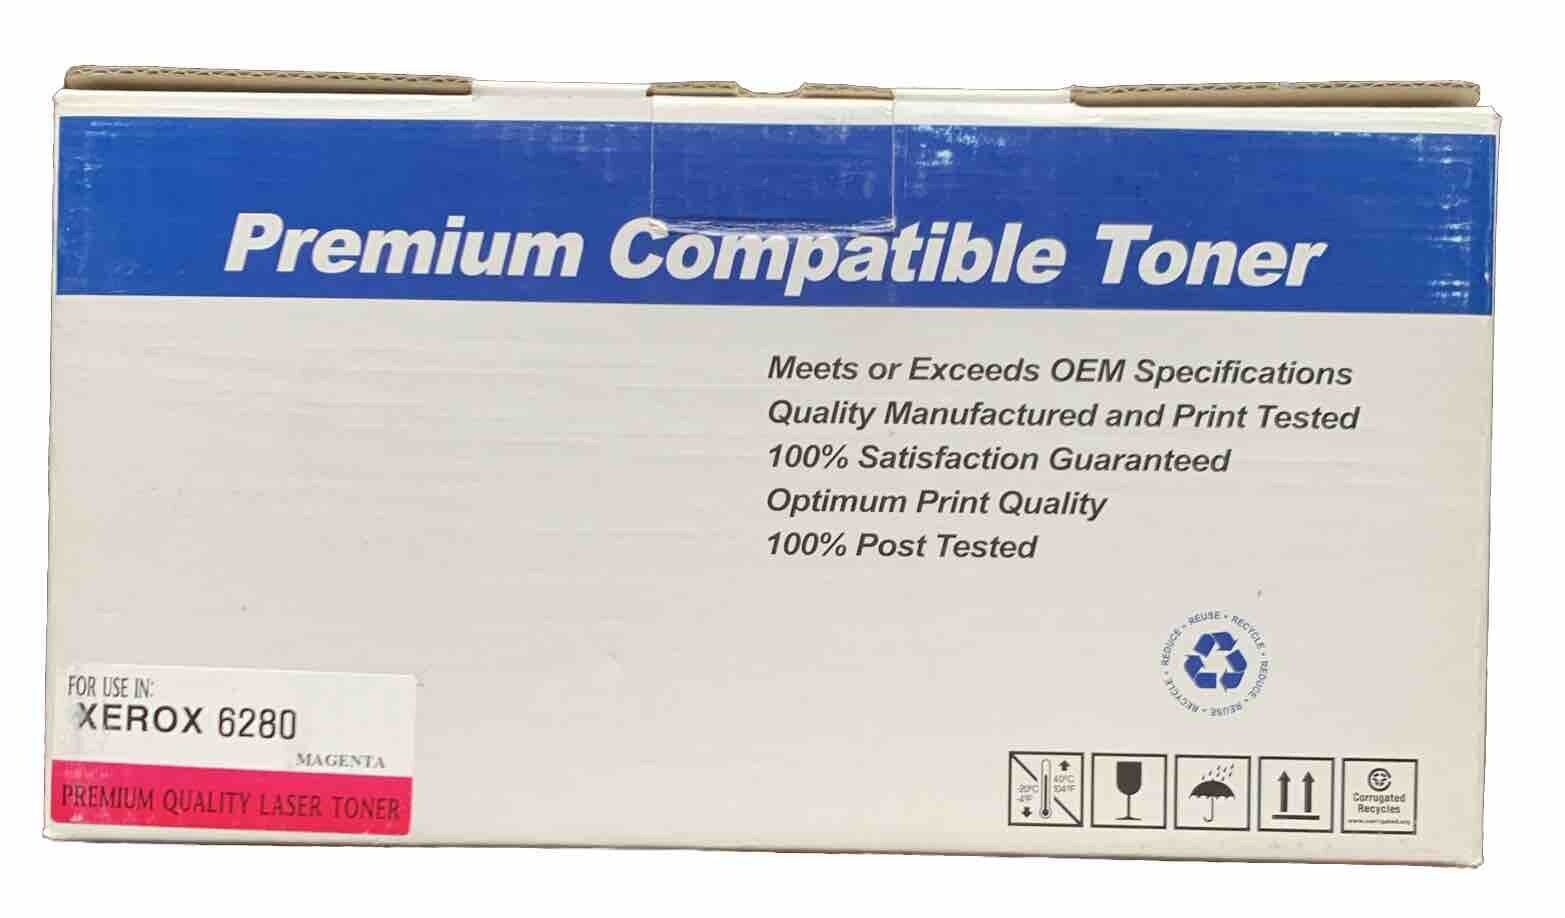 Premium Compatible Laser Toner Xerox 6280 Magenta